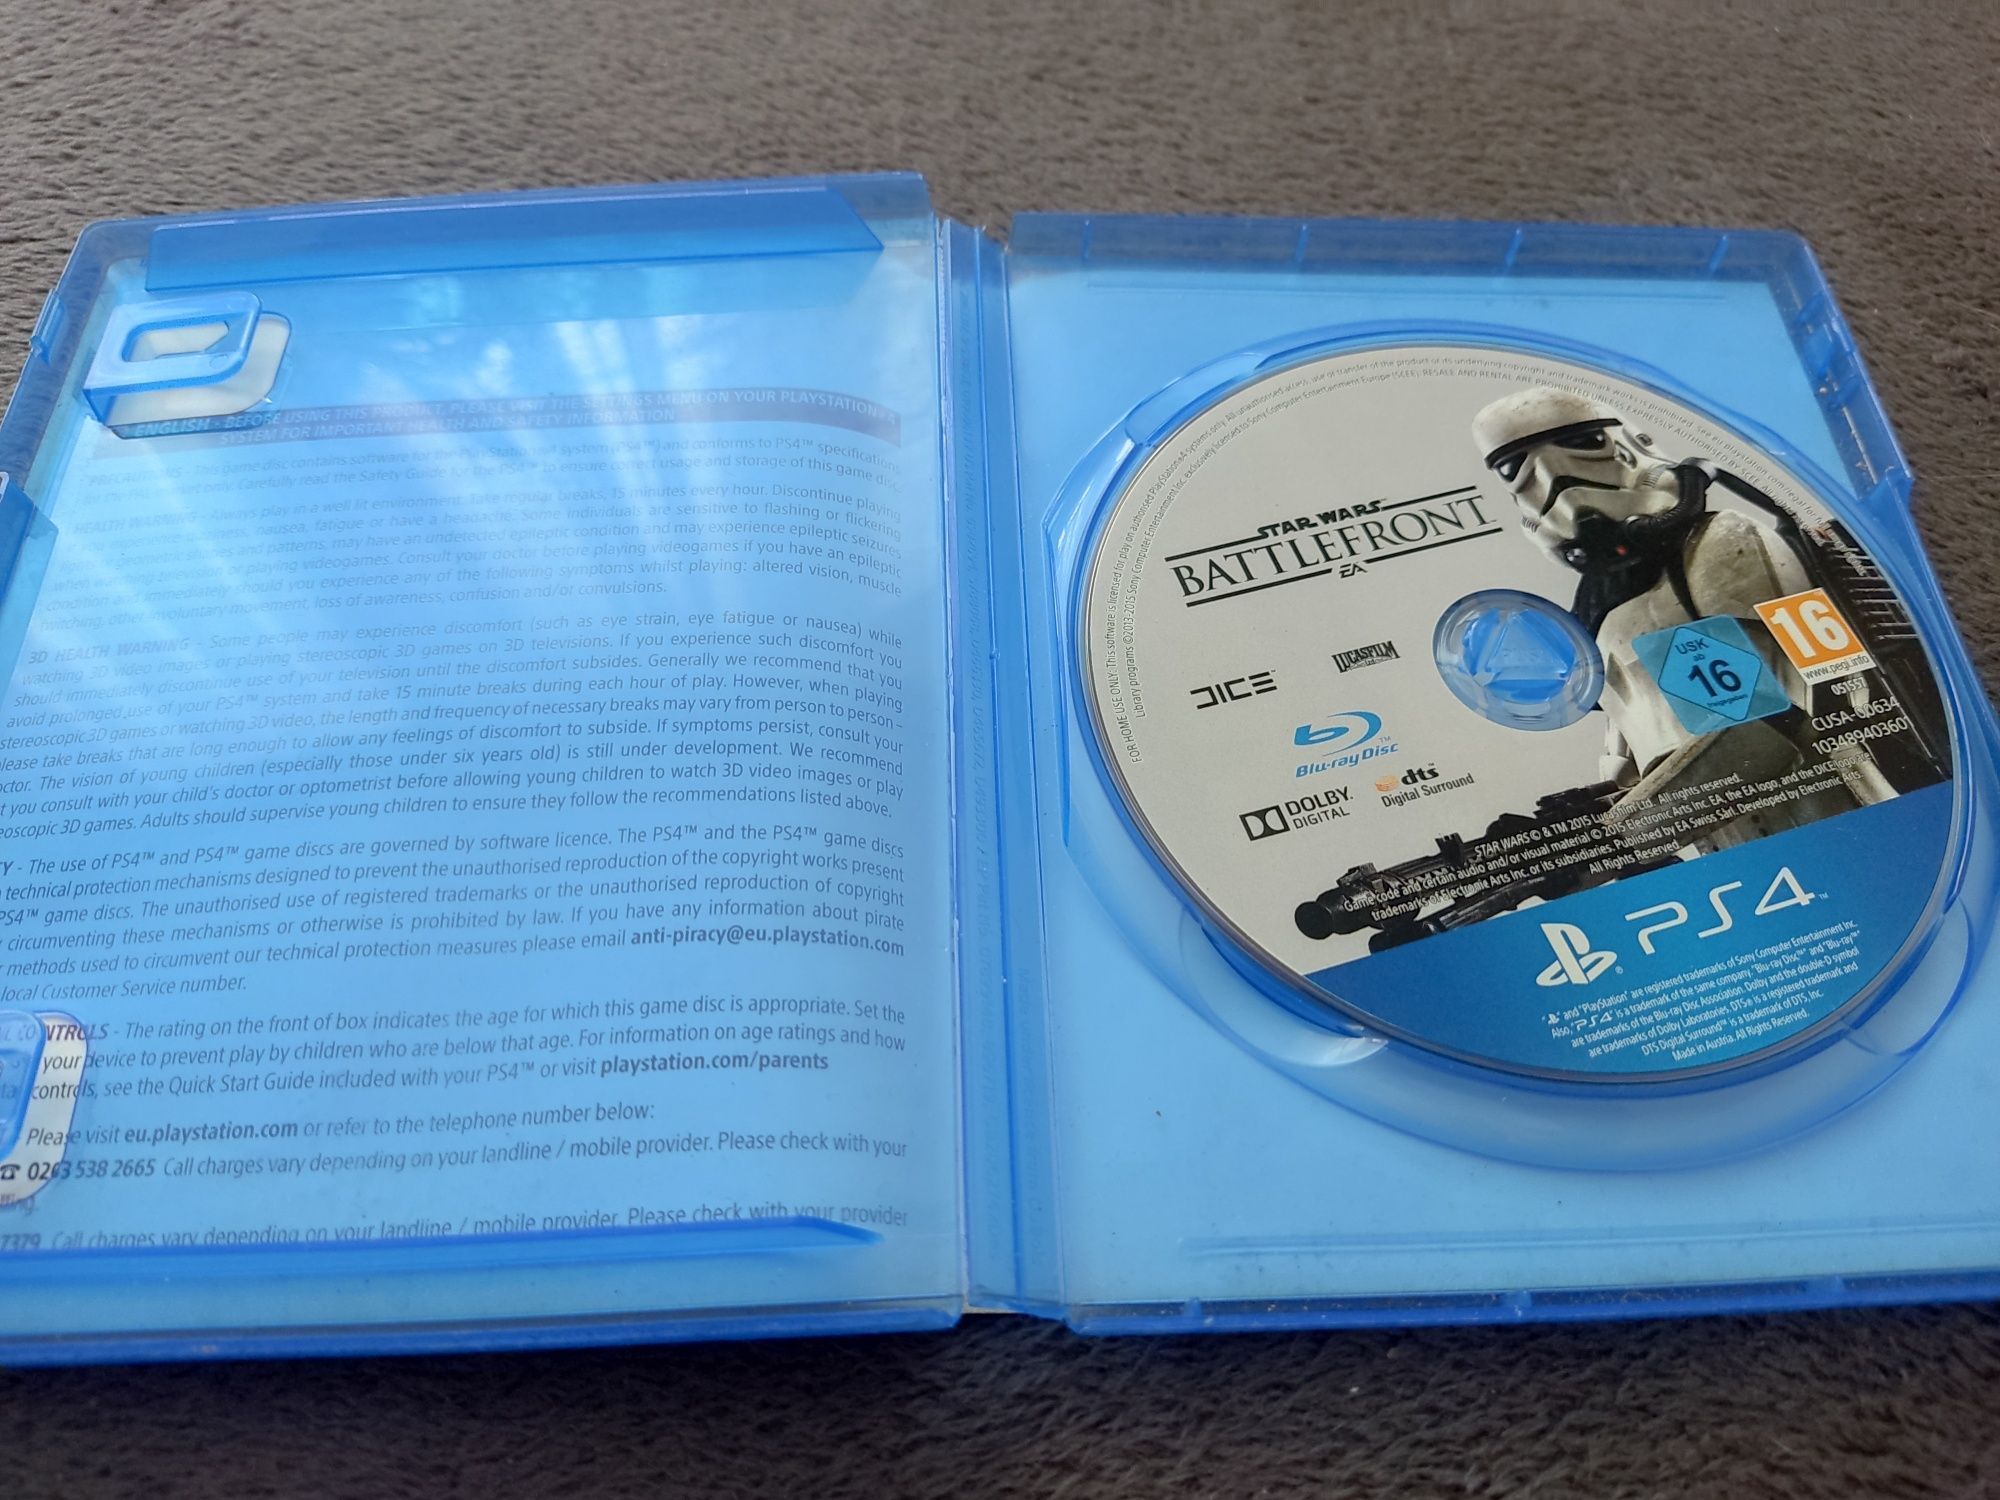 Battlefront PS4 PS5 wysyłka olx bądź odbiór osobisty